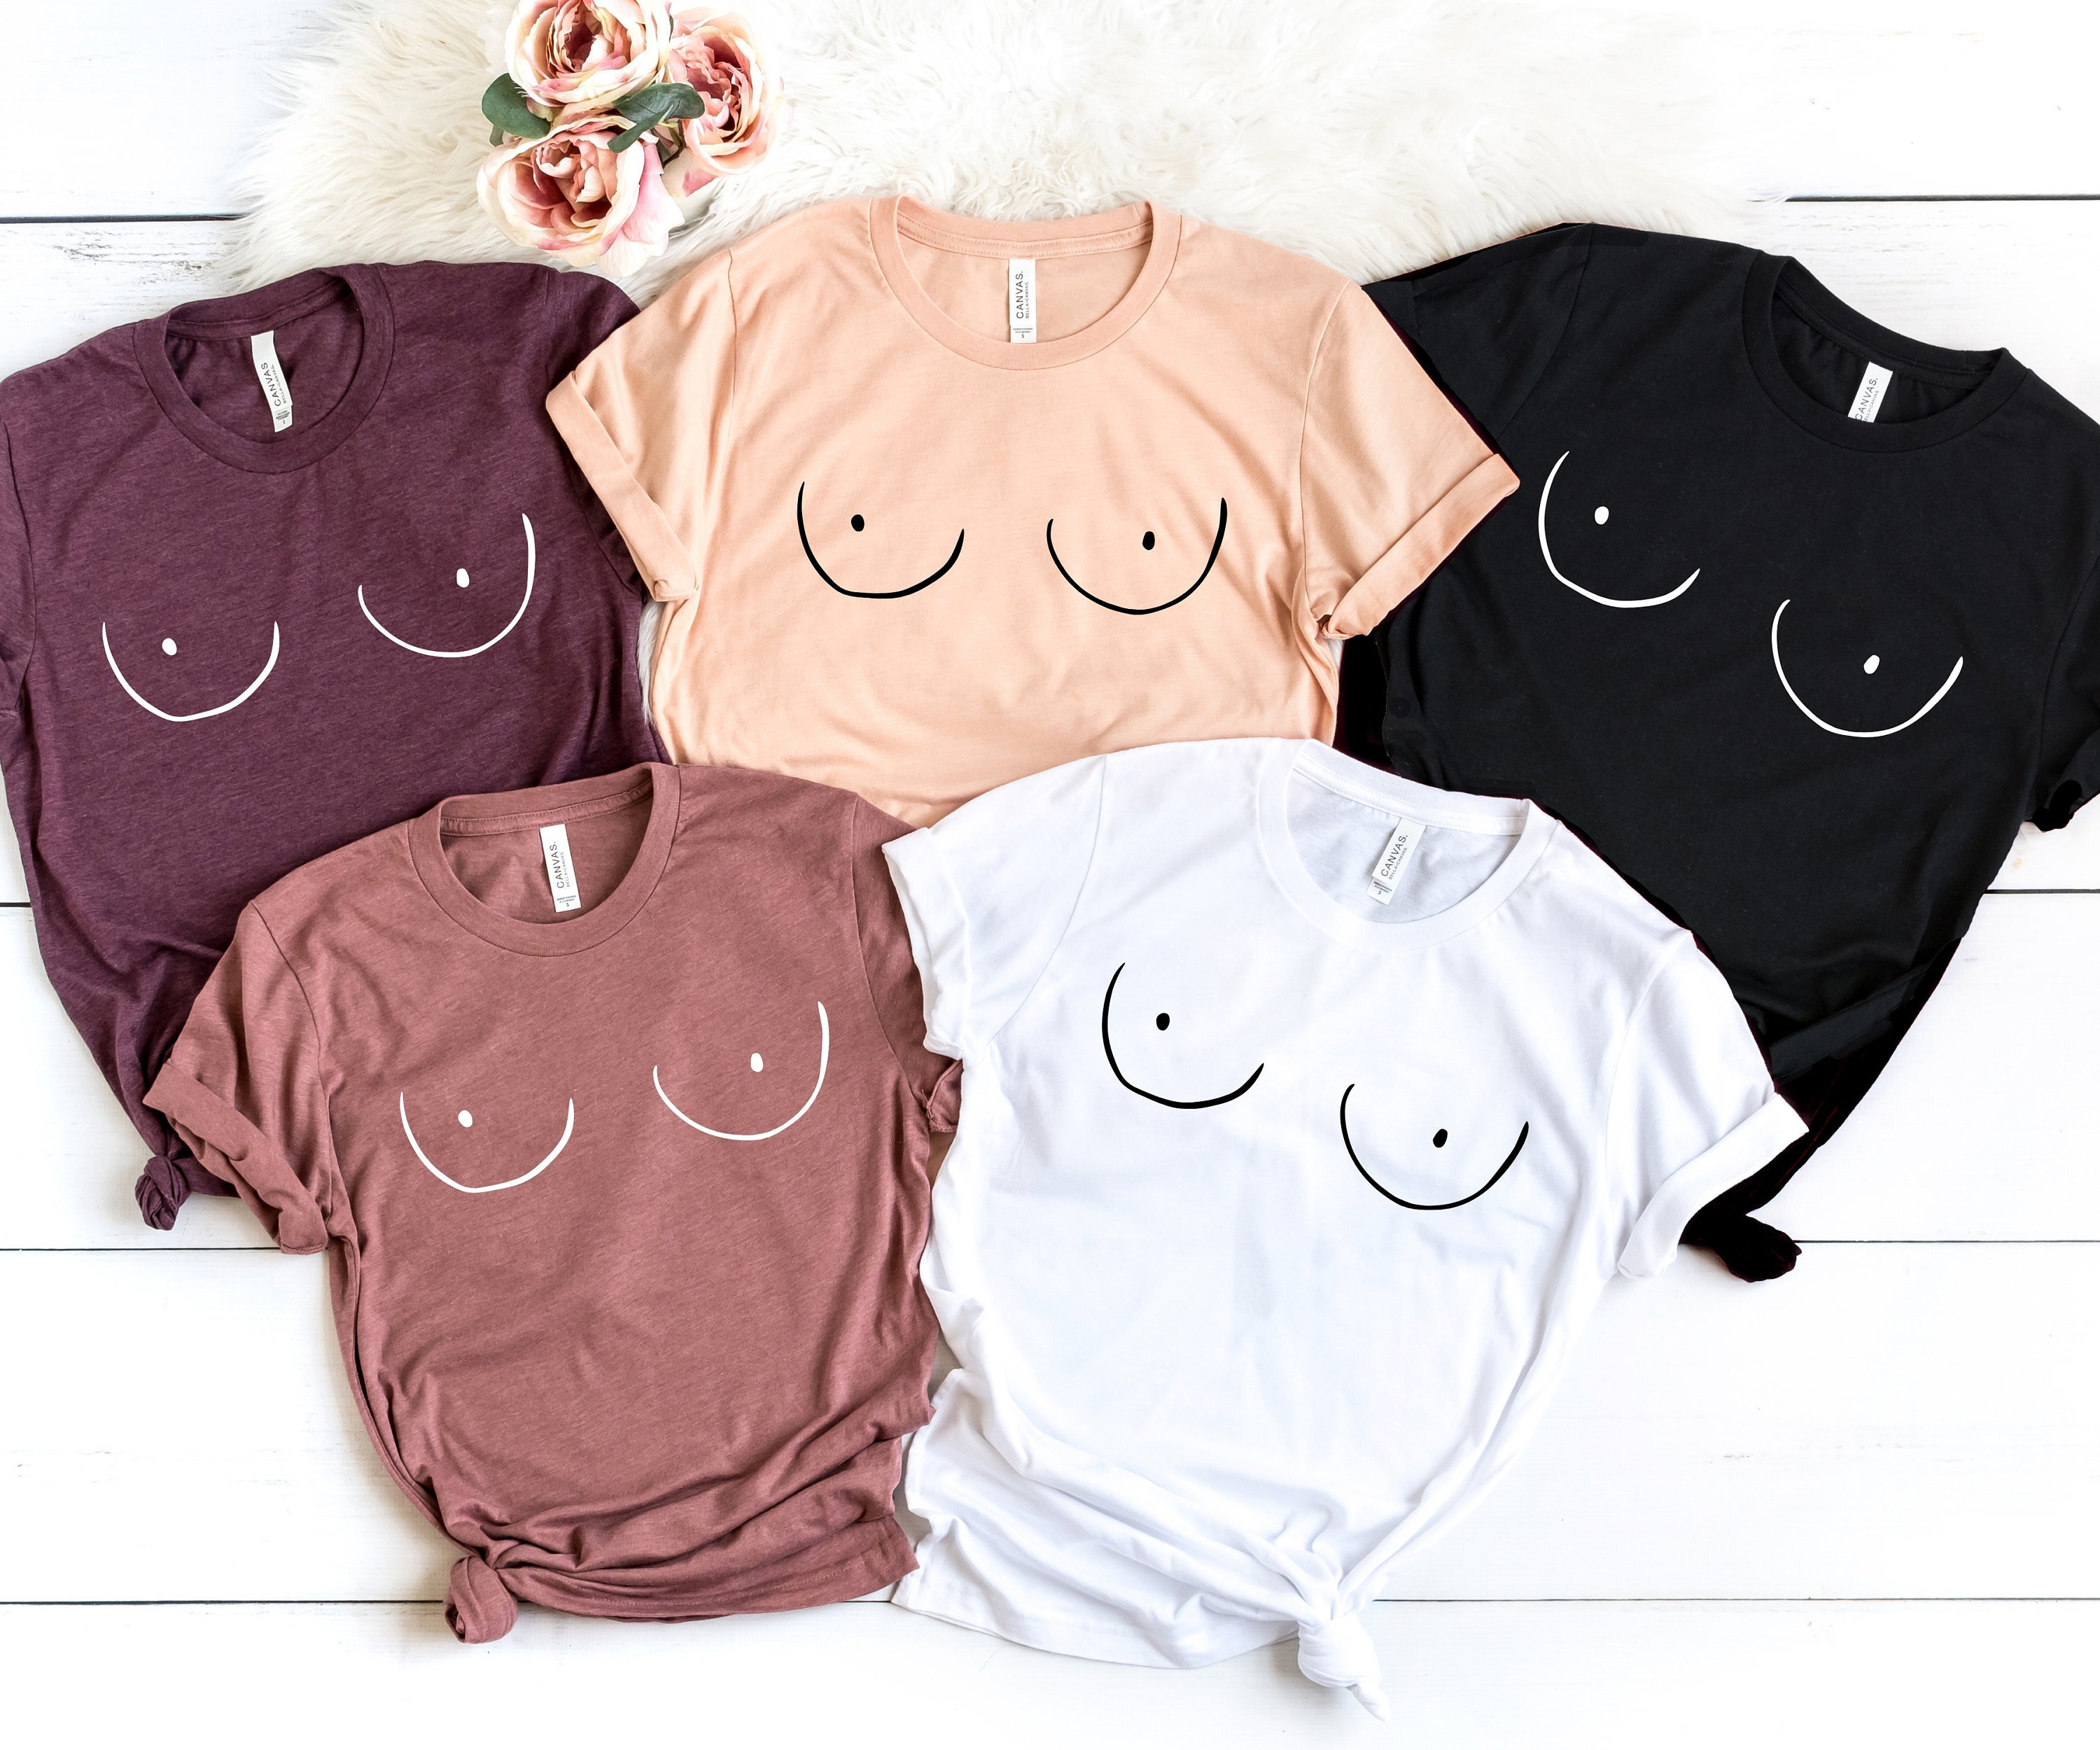 Beautiful Boobies Shirt Funny Breast Cancer' Women's T-Shirt